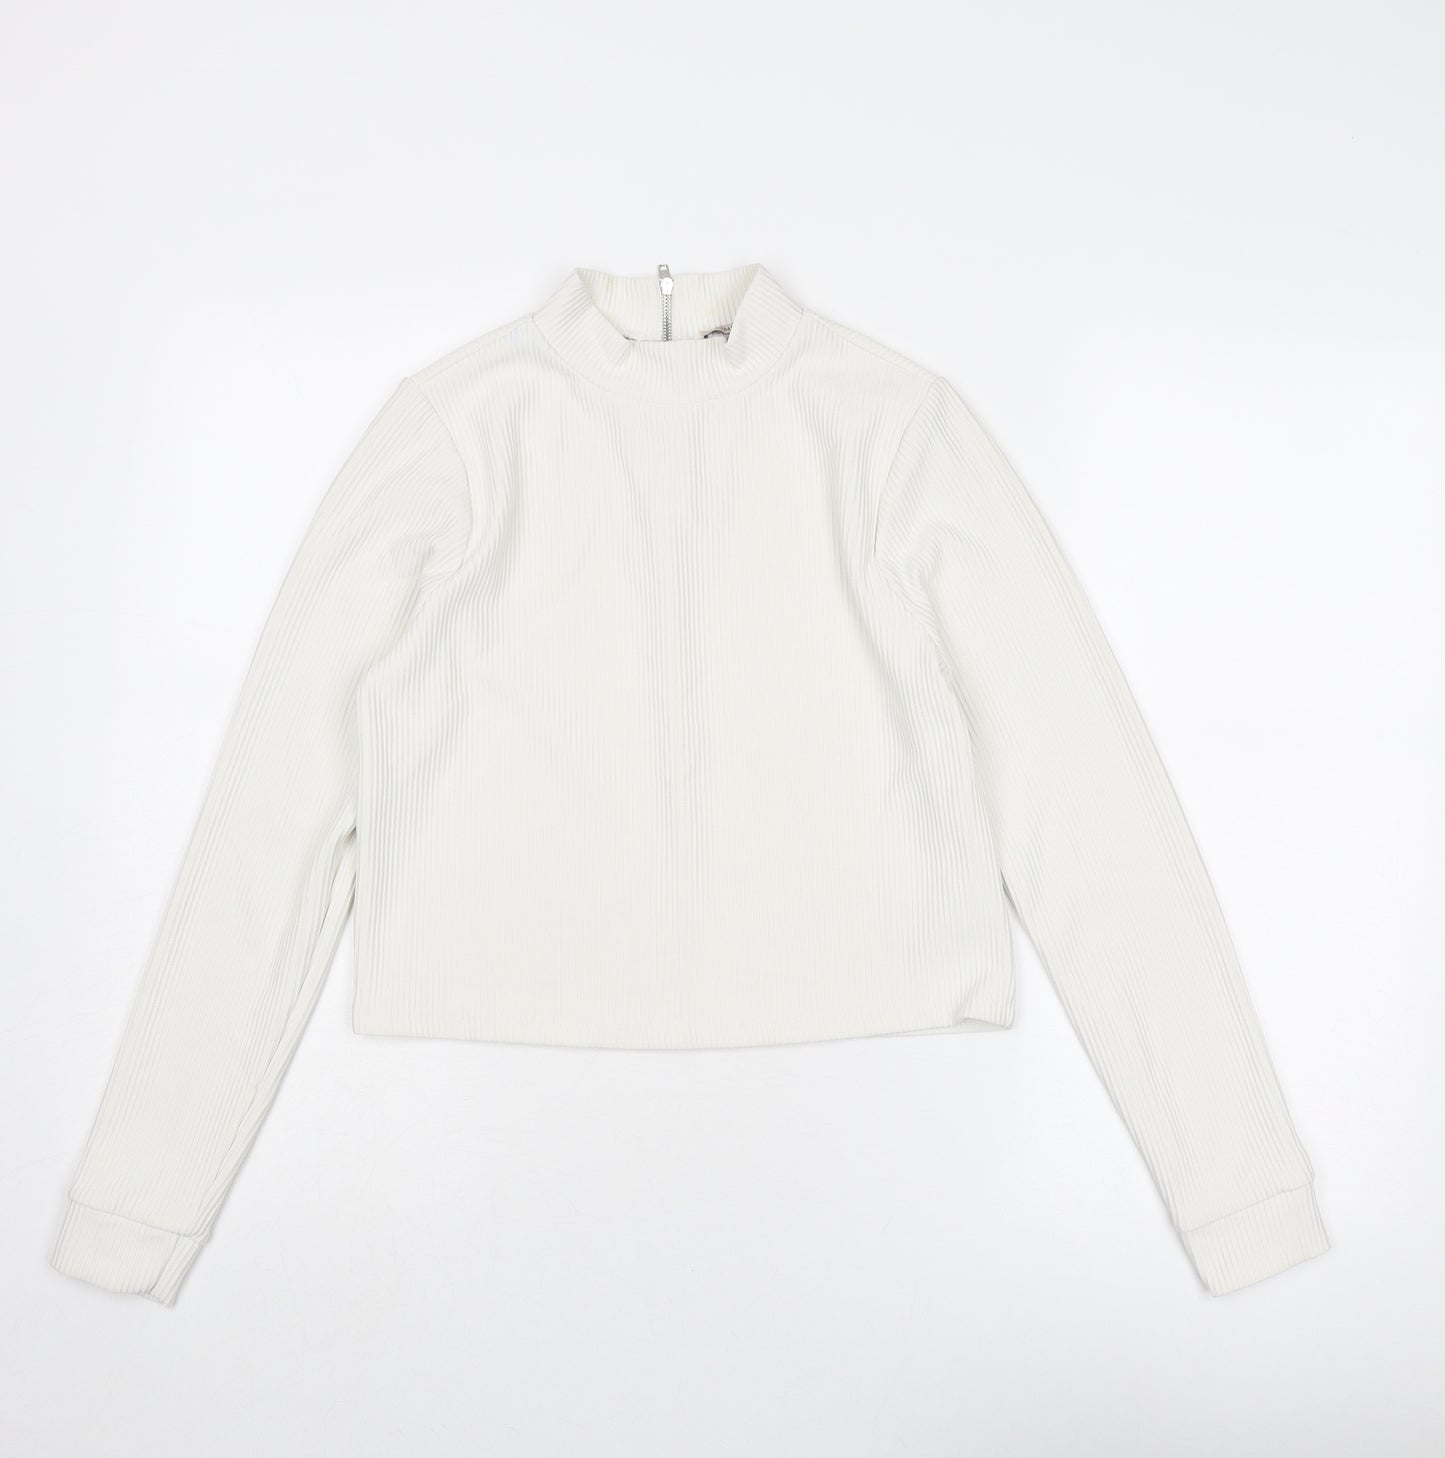 Marks and Spencer Womens White Polyester Basic Blouse Size 10 Mock Neck - Ribbed